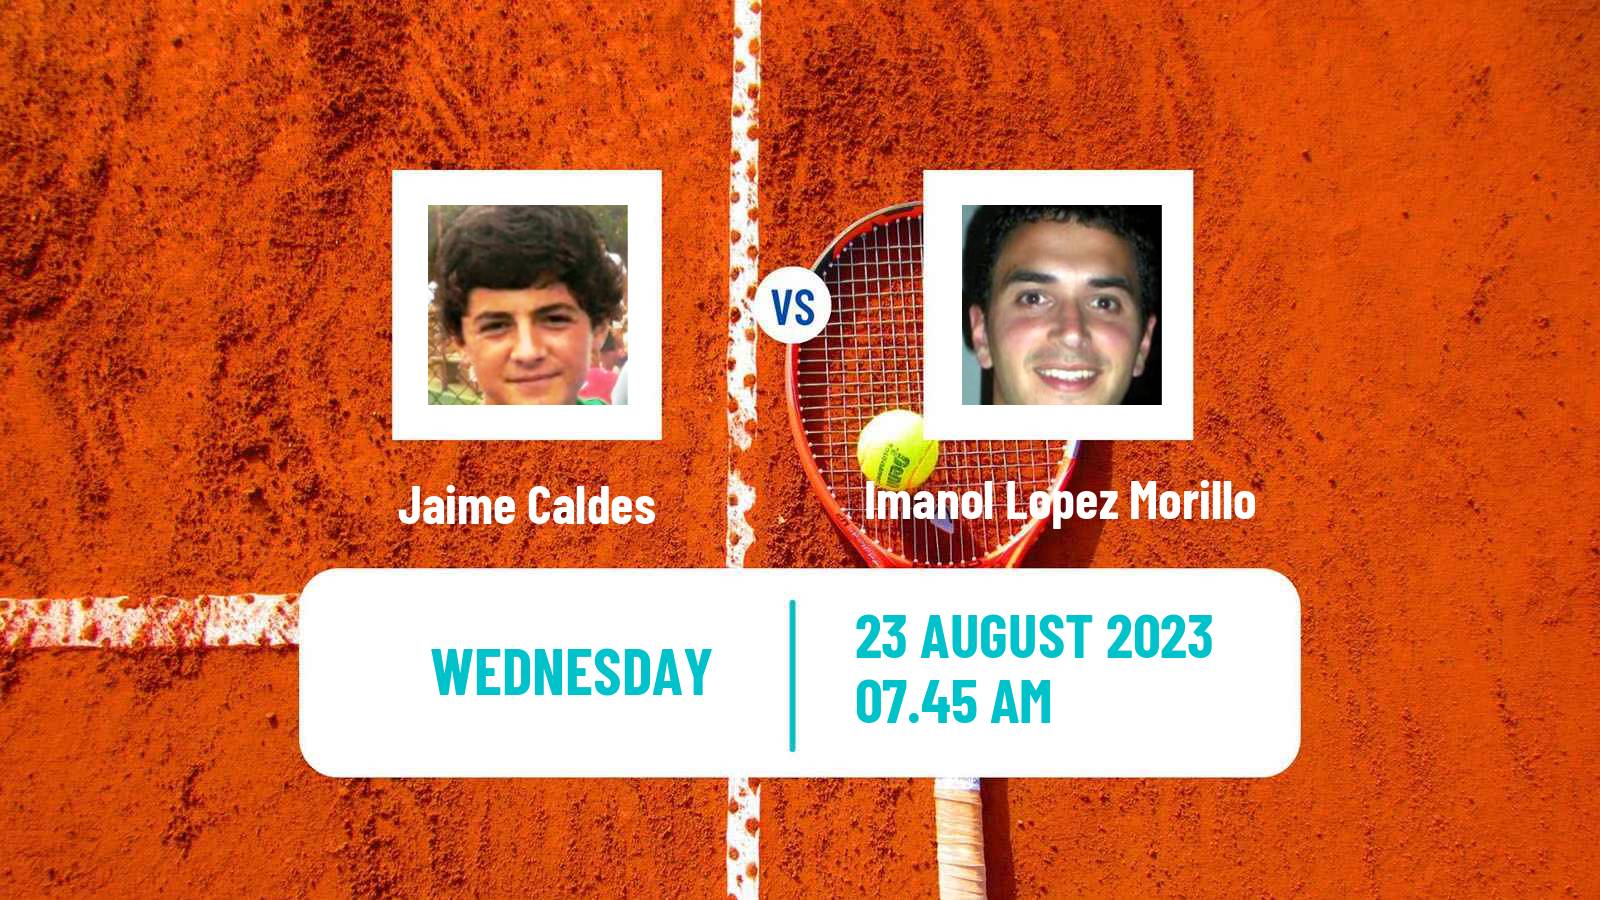 Tennis ITF M25 Santander Men Jaime Caldes - Imanol Lopez Morillo